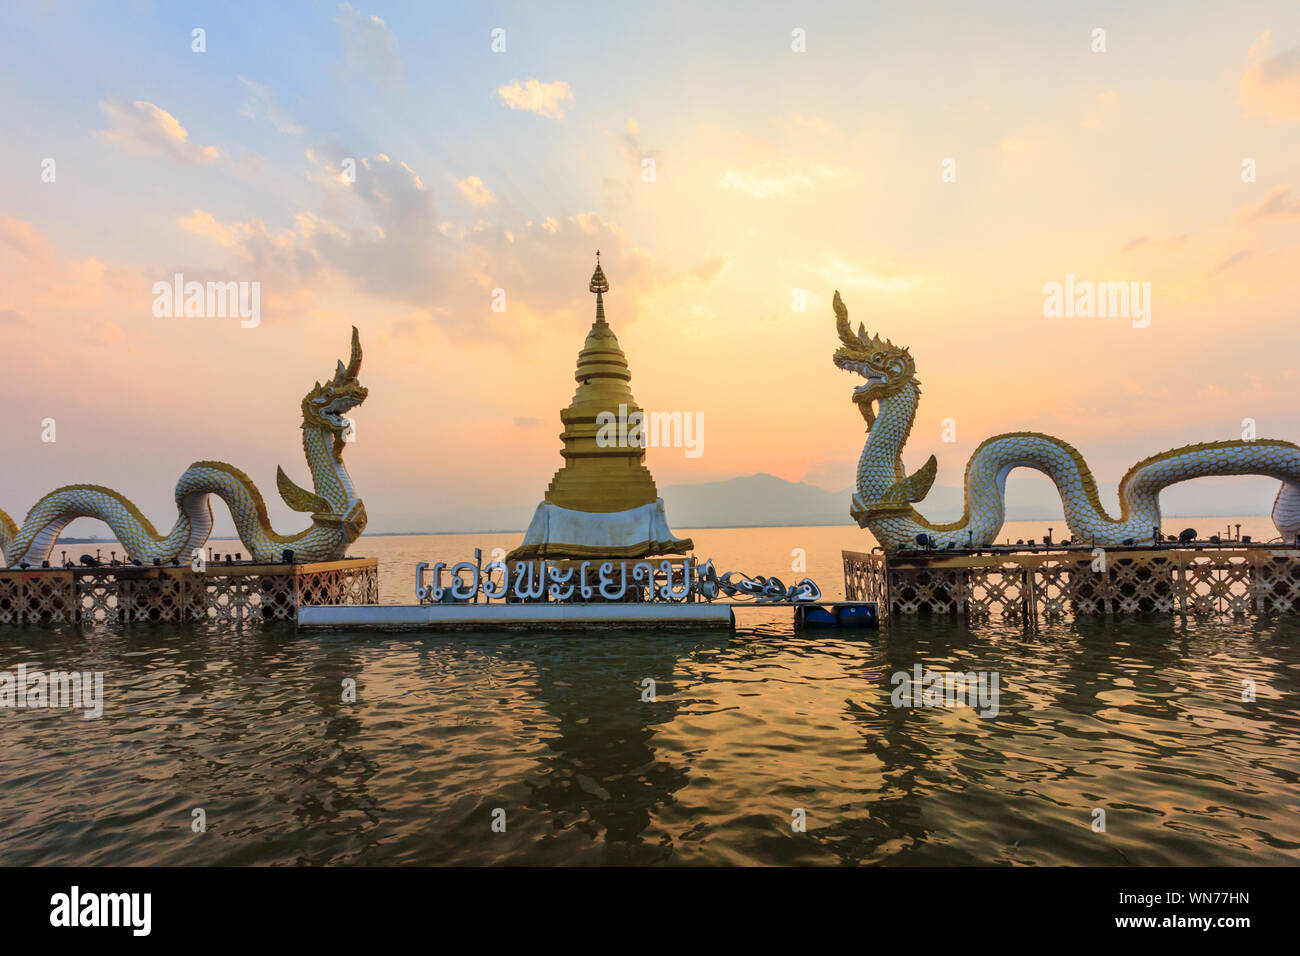 Sonnenuntergang über Phayao See. Thai Text sagt: "Willkommen in Phayao'. Thailand Stockfoto